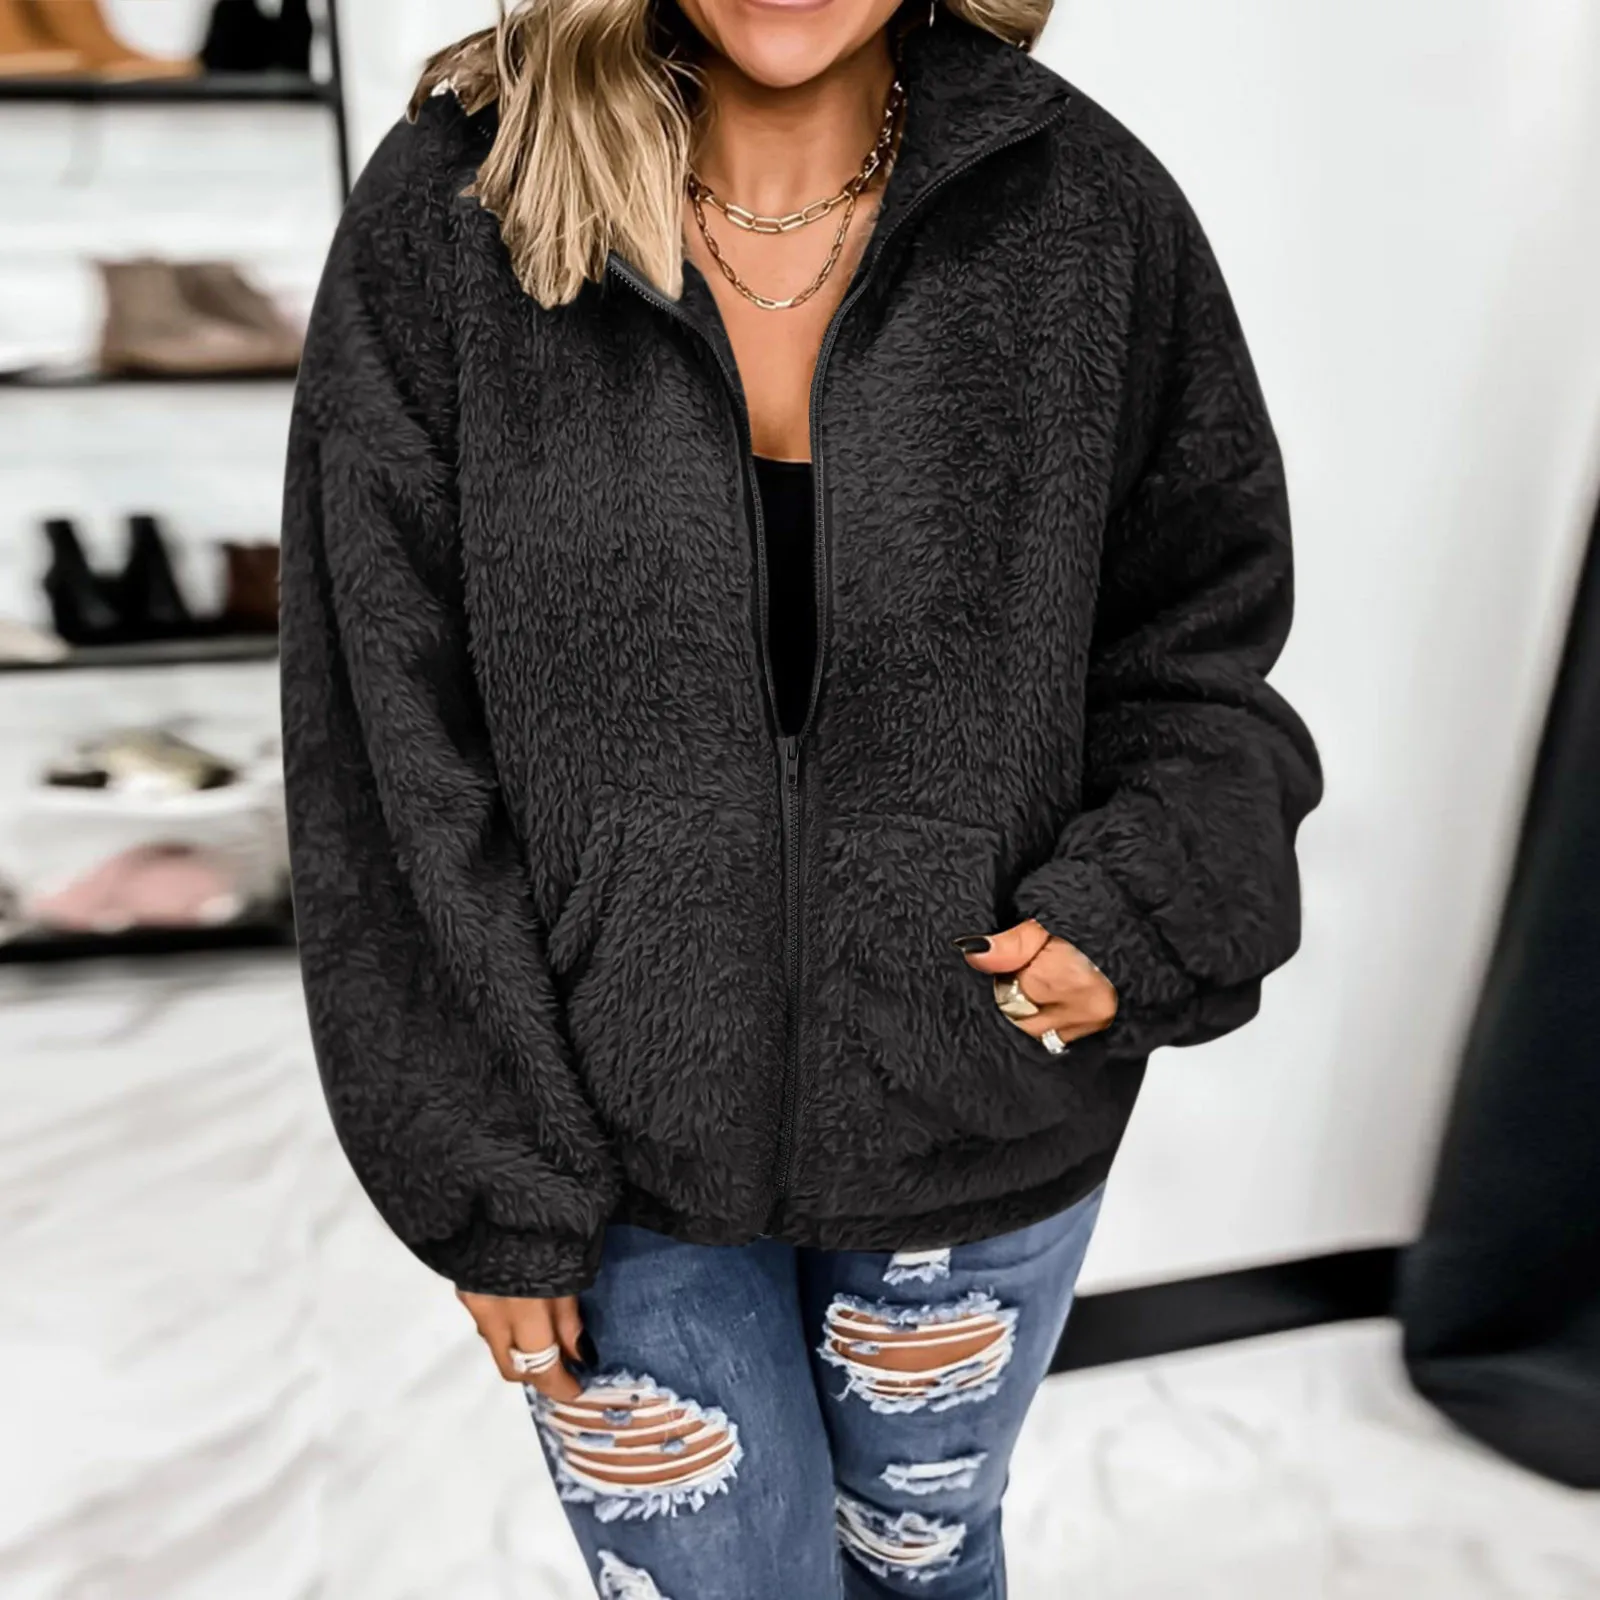 Cenlang Womens Long Sleeve Zip Up Fleece Hoodies Plus Size Casual Sherpa Sweatshirt Winter Warm Fleece Pullover Jacket Outwear Coat with Pockets 